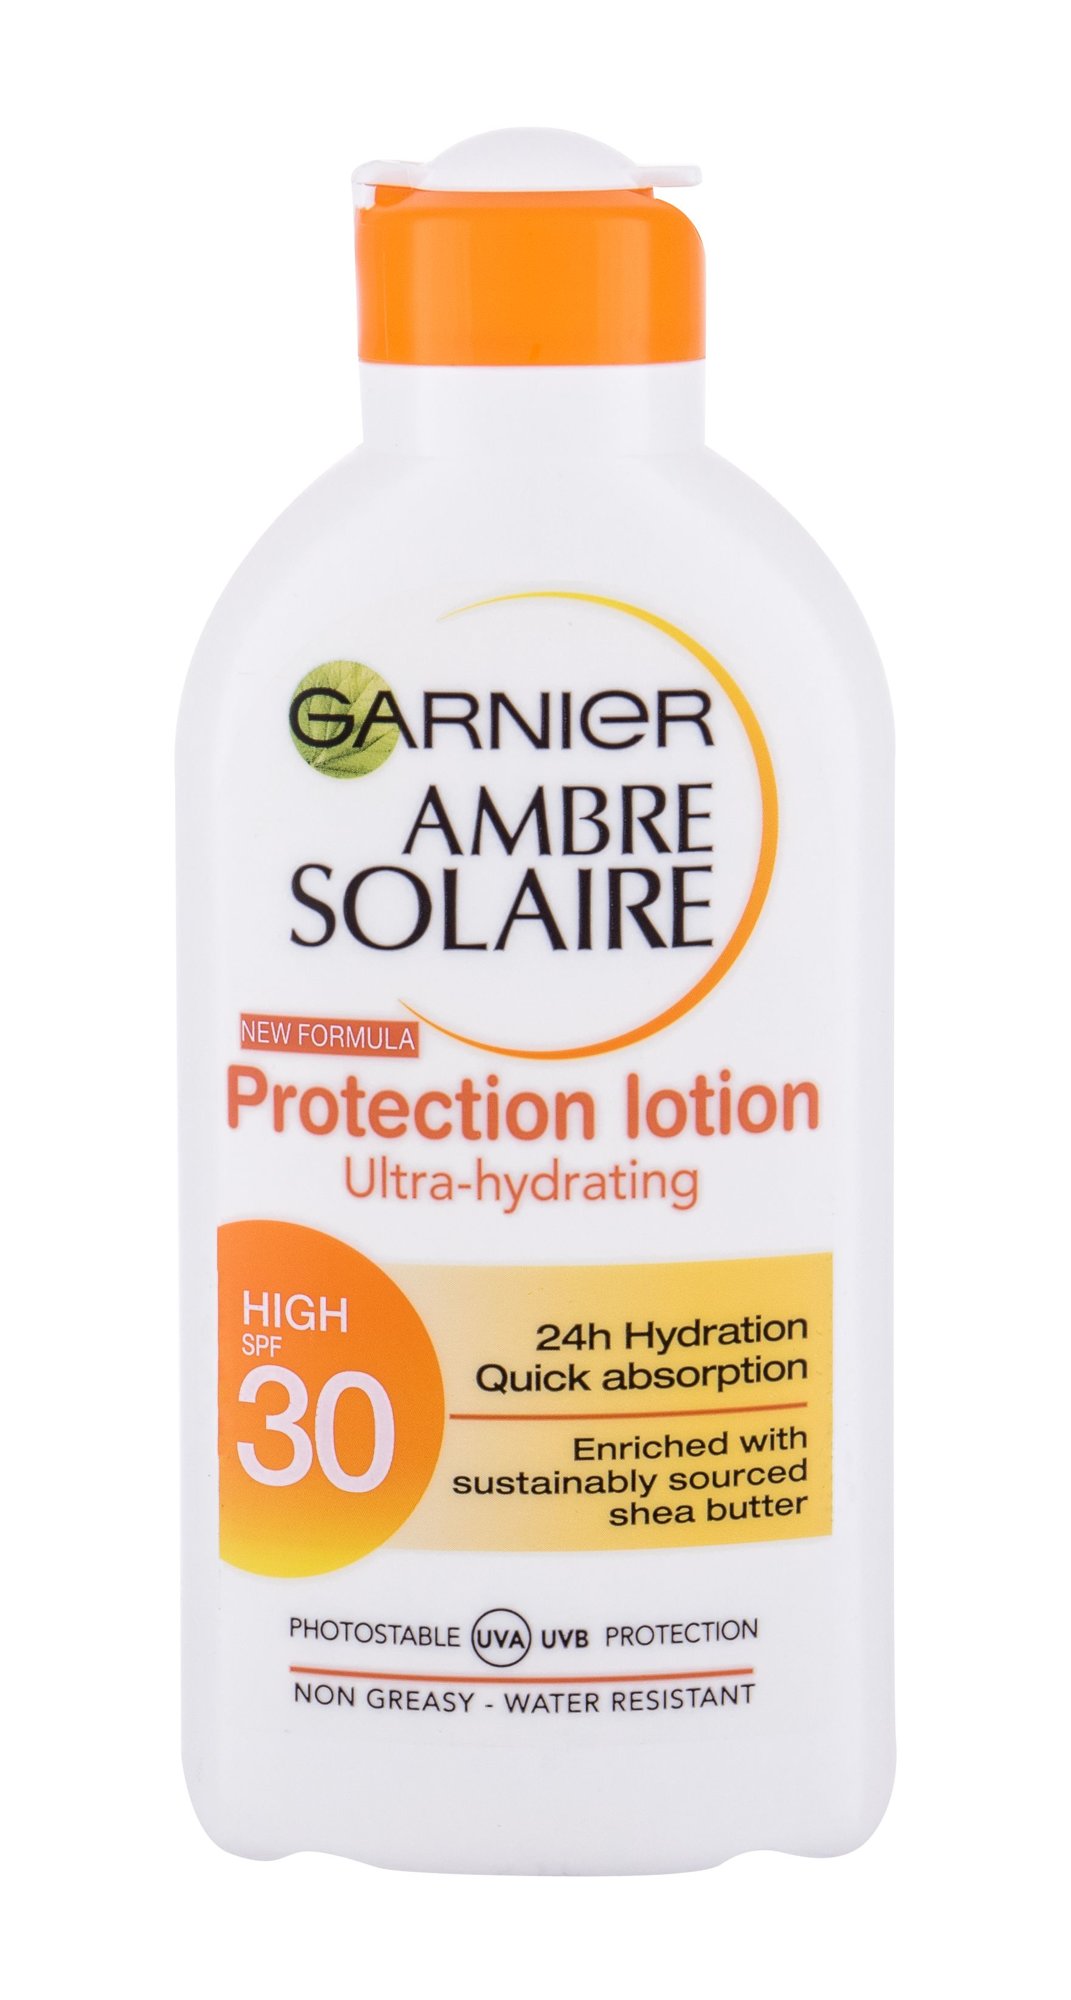 Garnier Ambre Solaire Protection Lotion įdegio losjonas